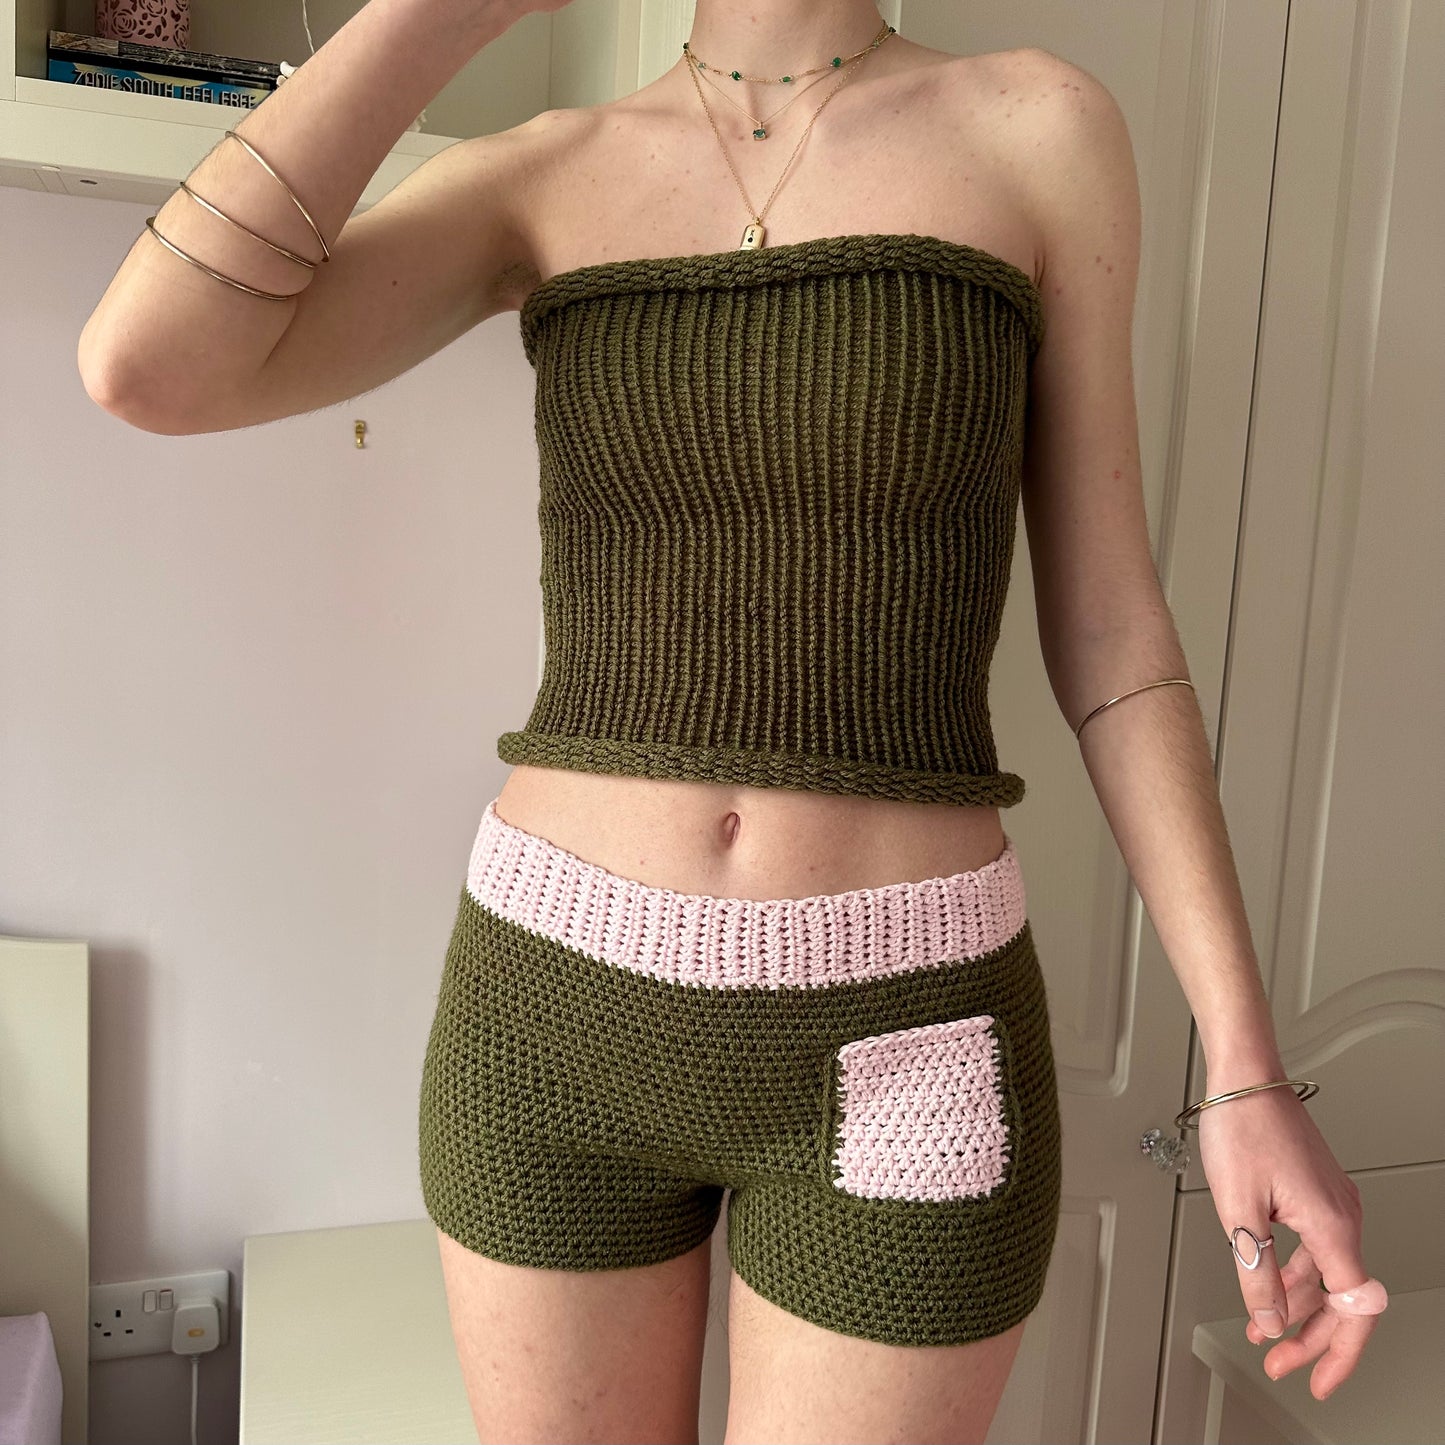 The Jade Shorts - handmade crochet shorts in khaki and baby pink with pocket